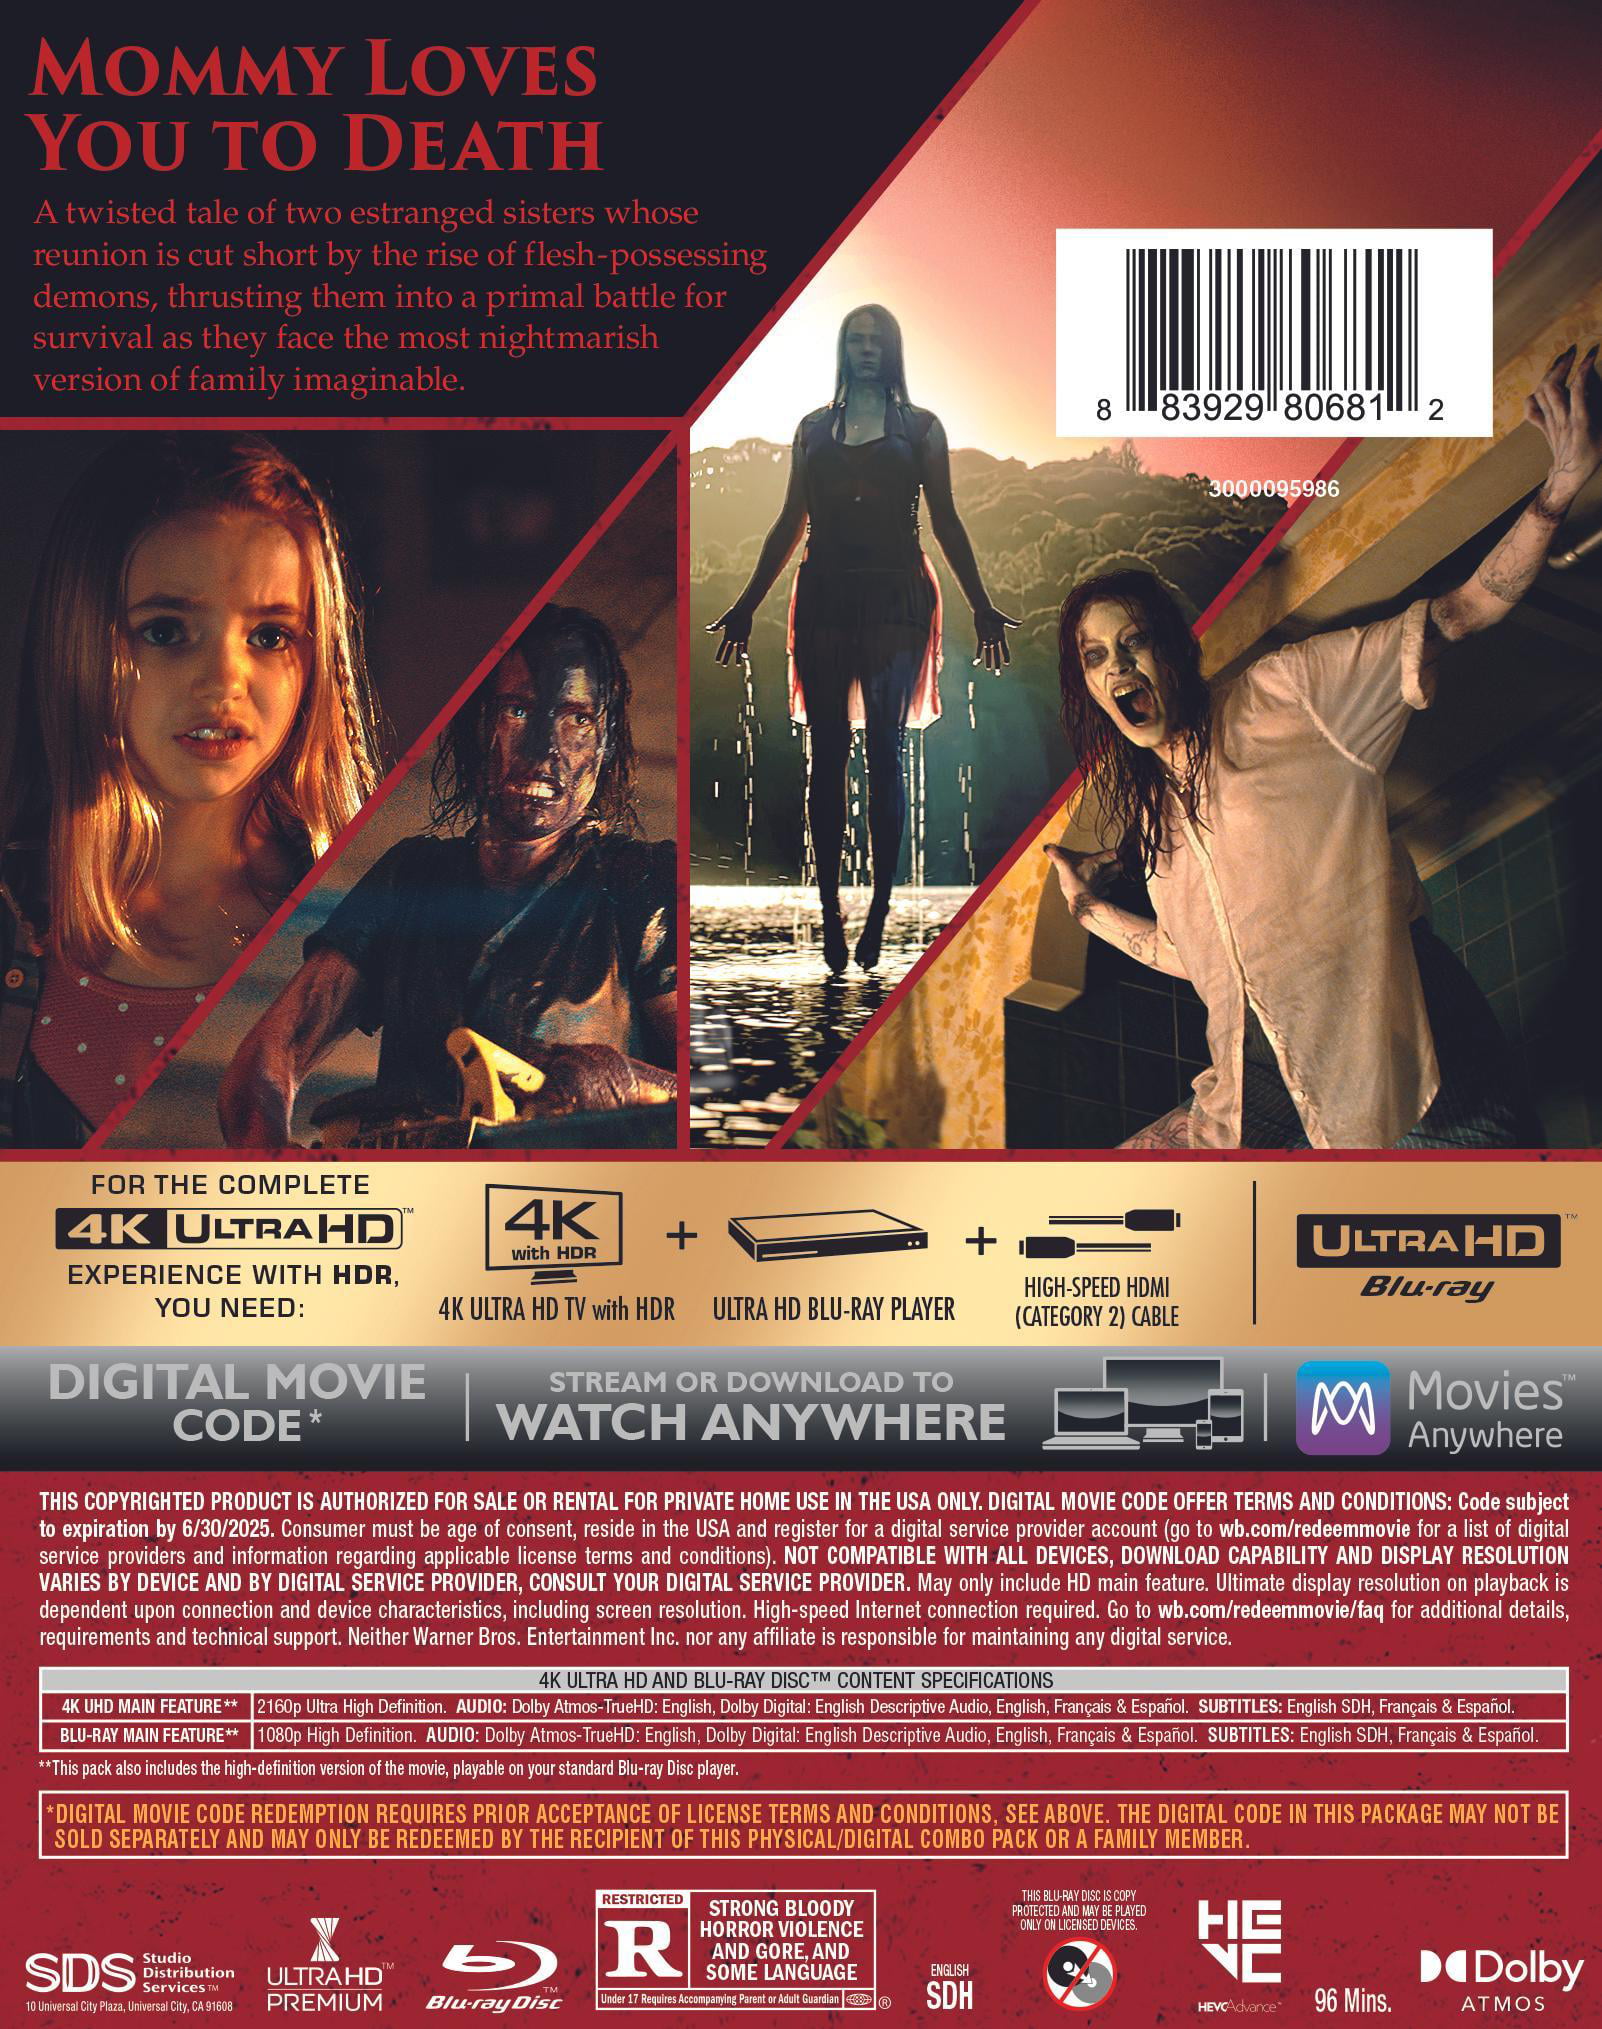 Evil Dead Rise (Blu-ray + DVD + Digital)